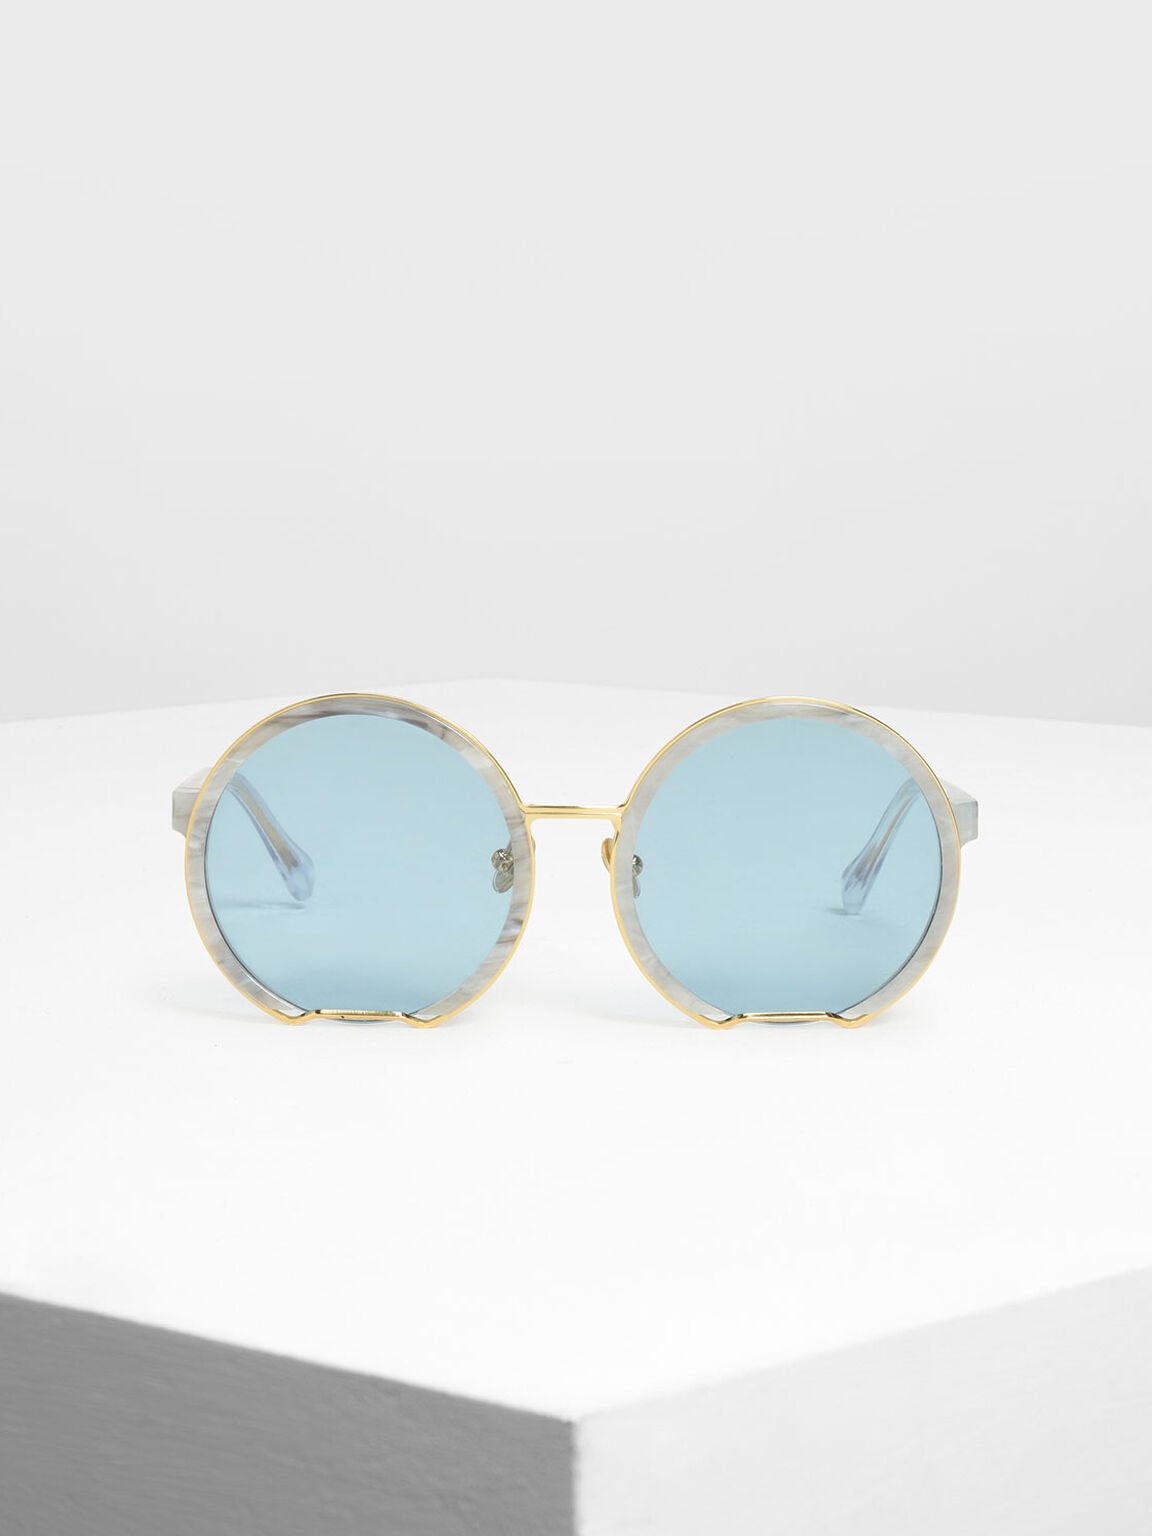 Cut Off Frame Round Sunglasses, White, hi-res